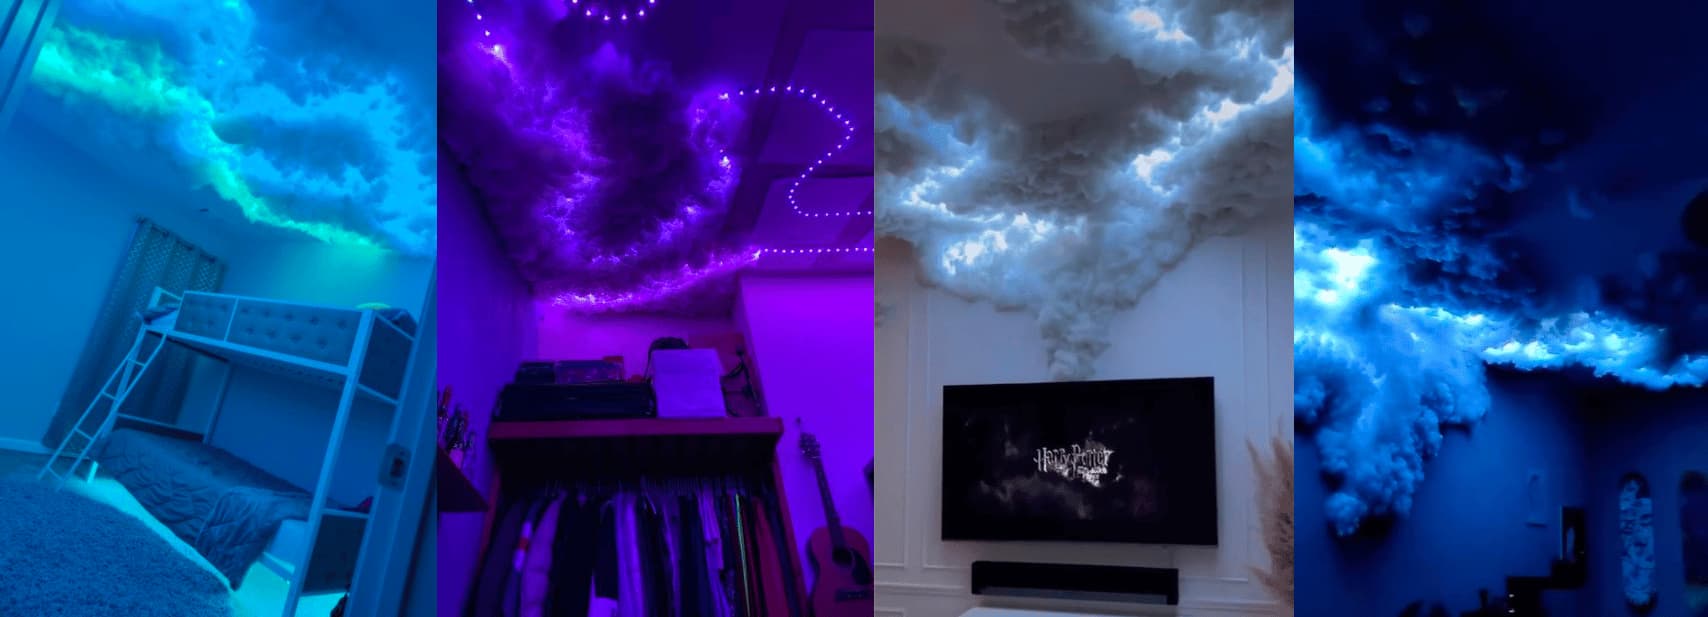 plafond de nuage led chambre aesthetic